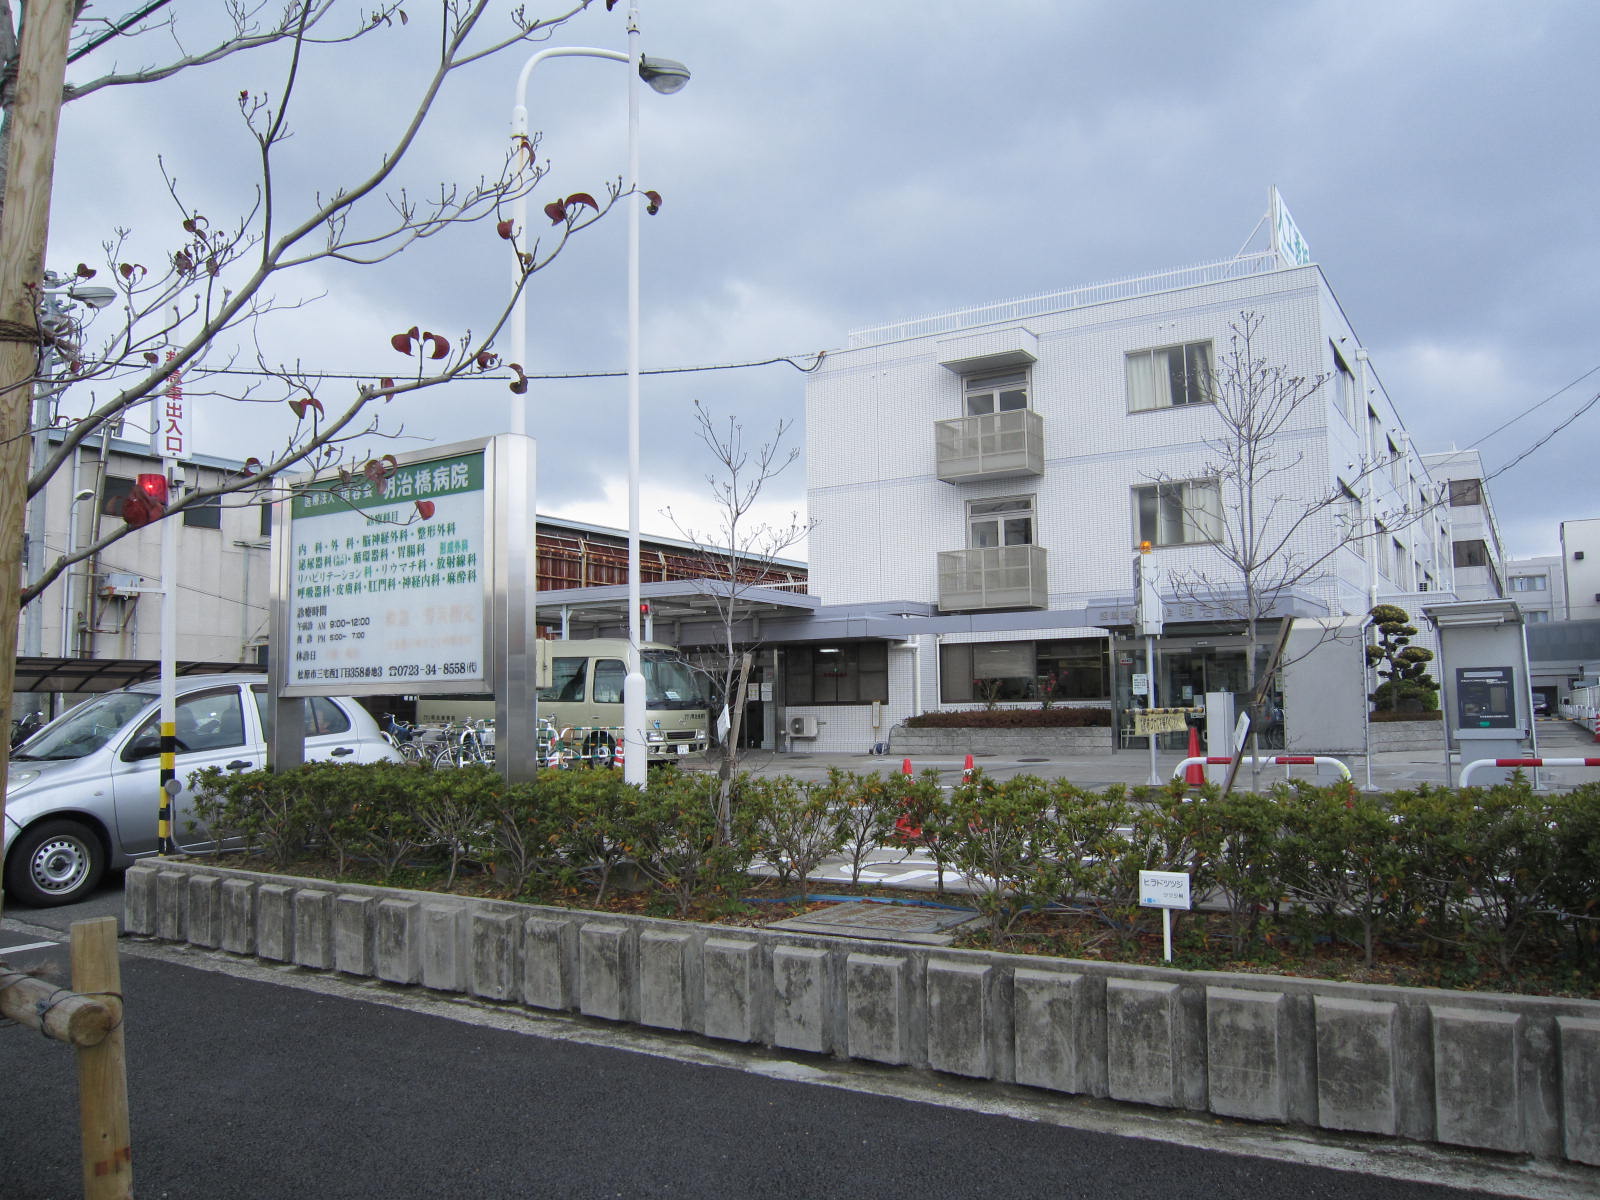 Hospital. 1877m until the medical corporation Kakitani Board Meiji Bridge Hospital (Hospital)